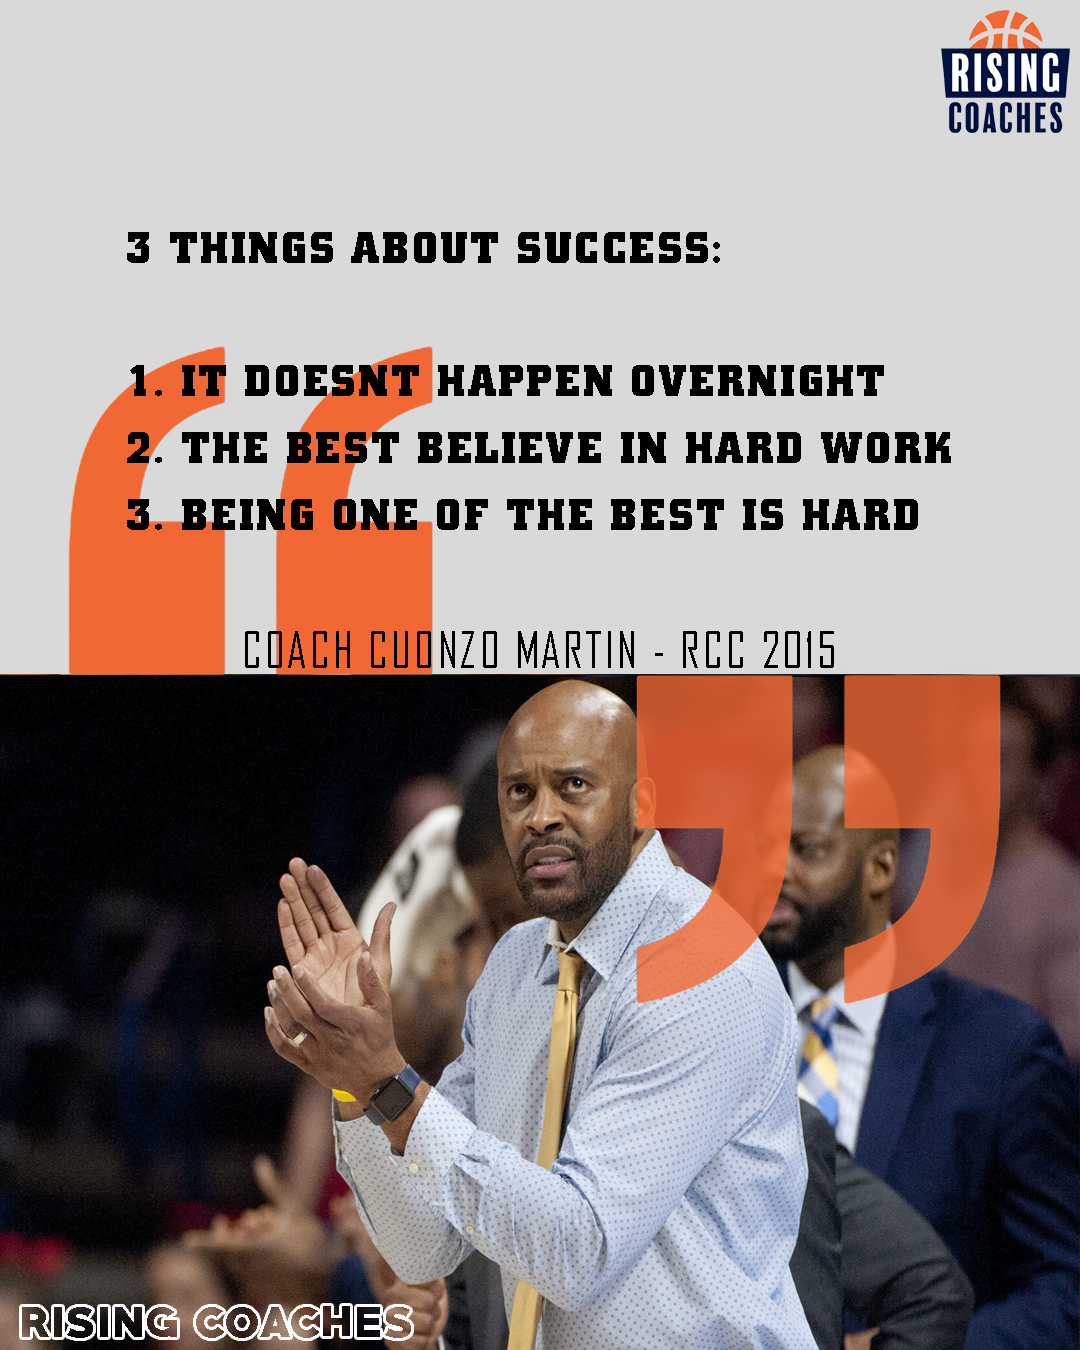 Quotes: Cuonzo Martin - Success Doesn't Happen Overnight